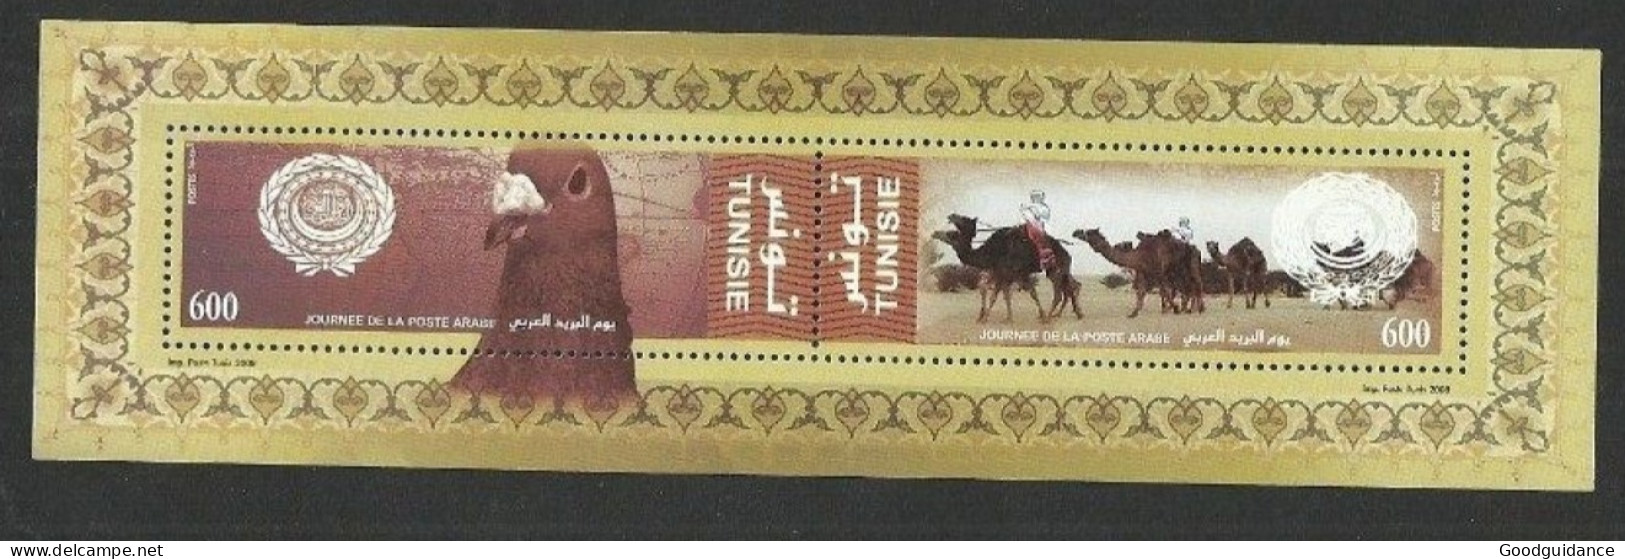 2008- Tunisia-  Minisheet  - Arab Post Day 2008 - Bird - Camel - Desert - MNH** - Emissioni Congiunte